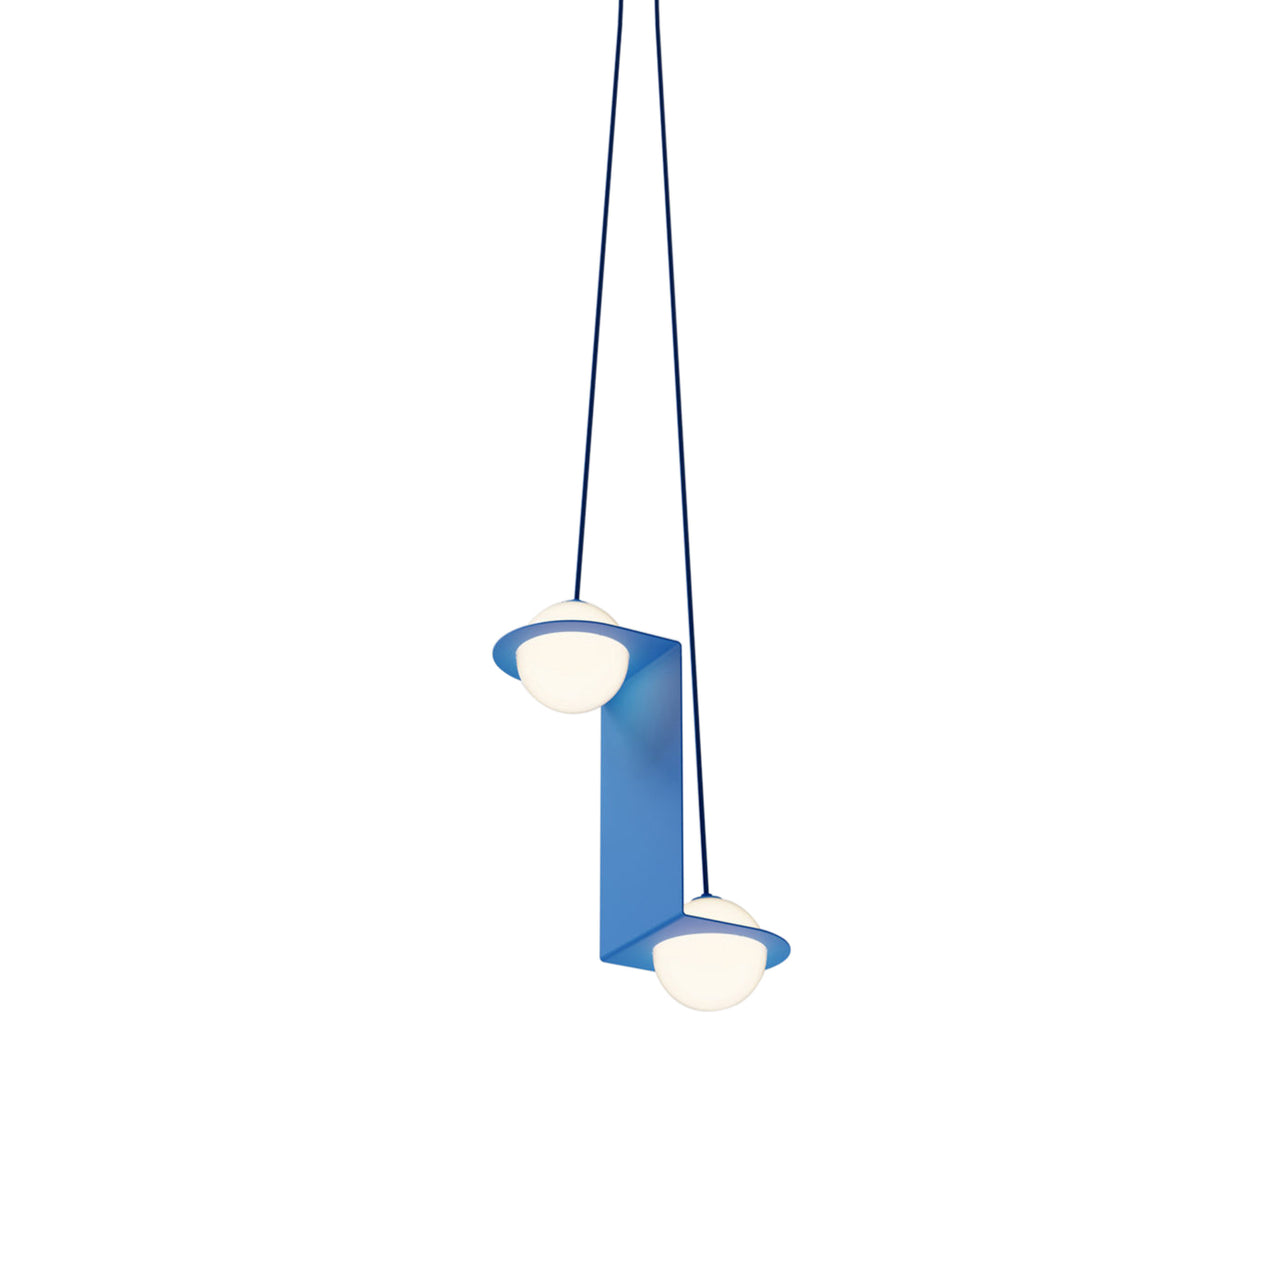 Laurent 05 Suspension Lamp: Blue + Blue + Angled Wires